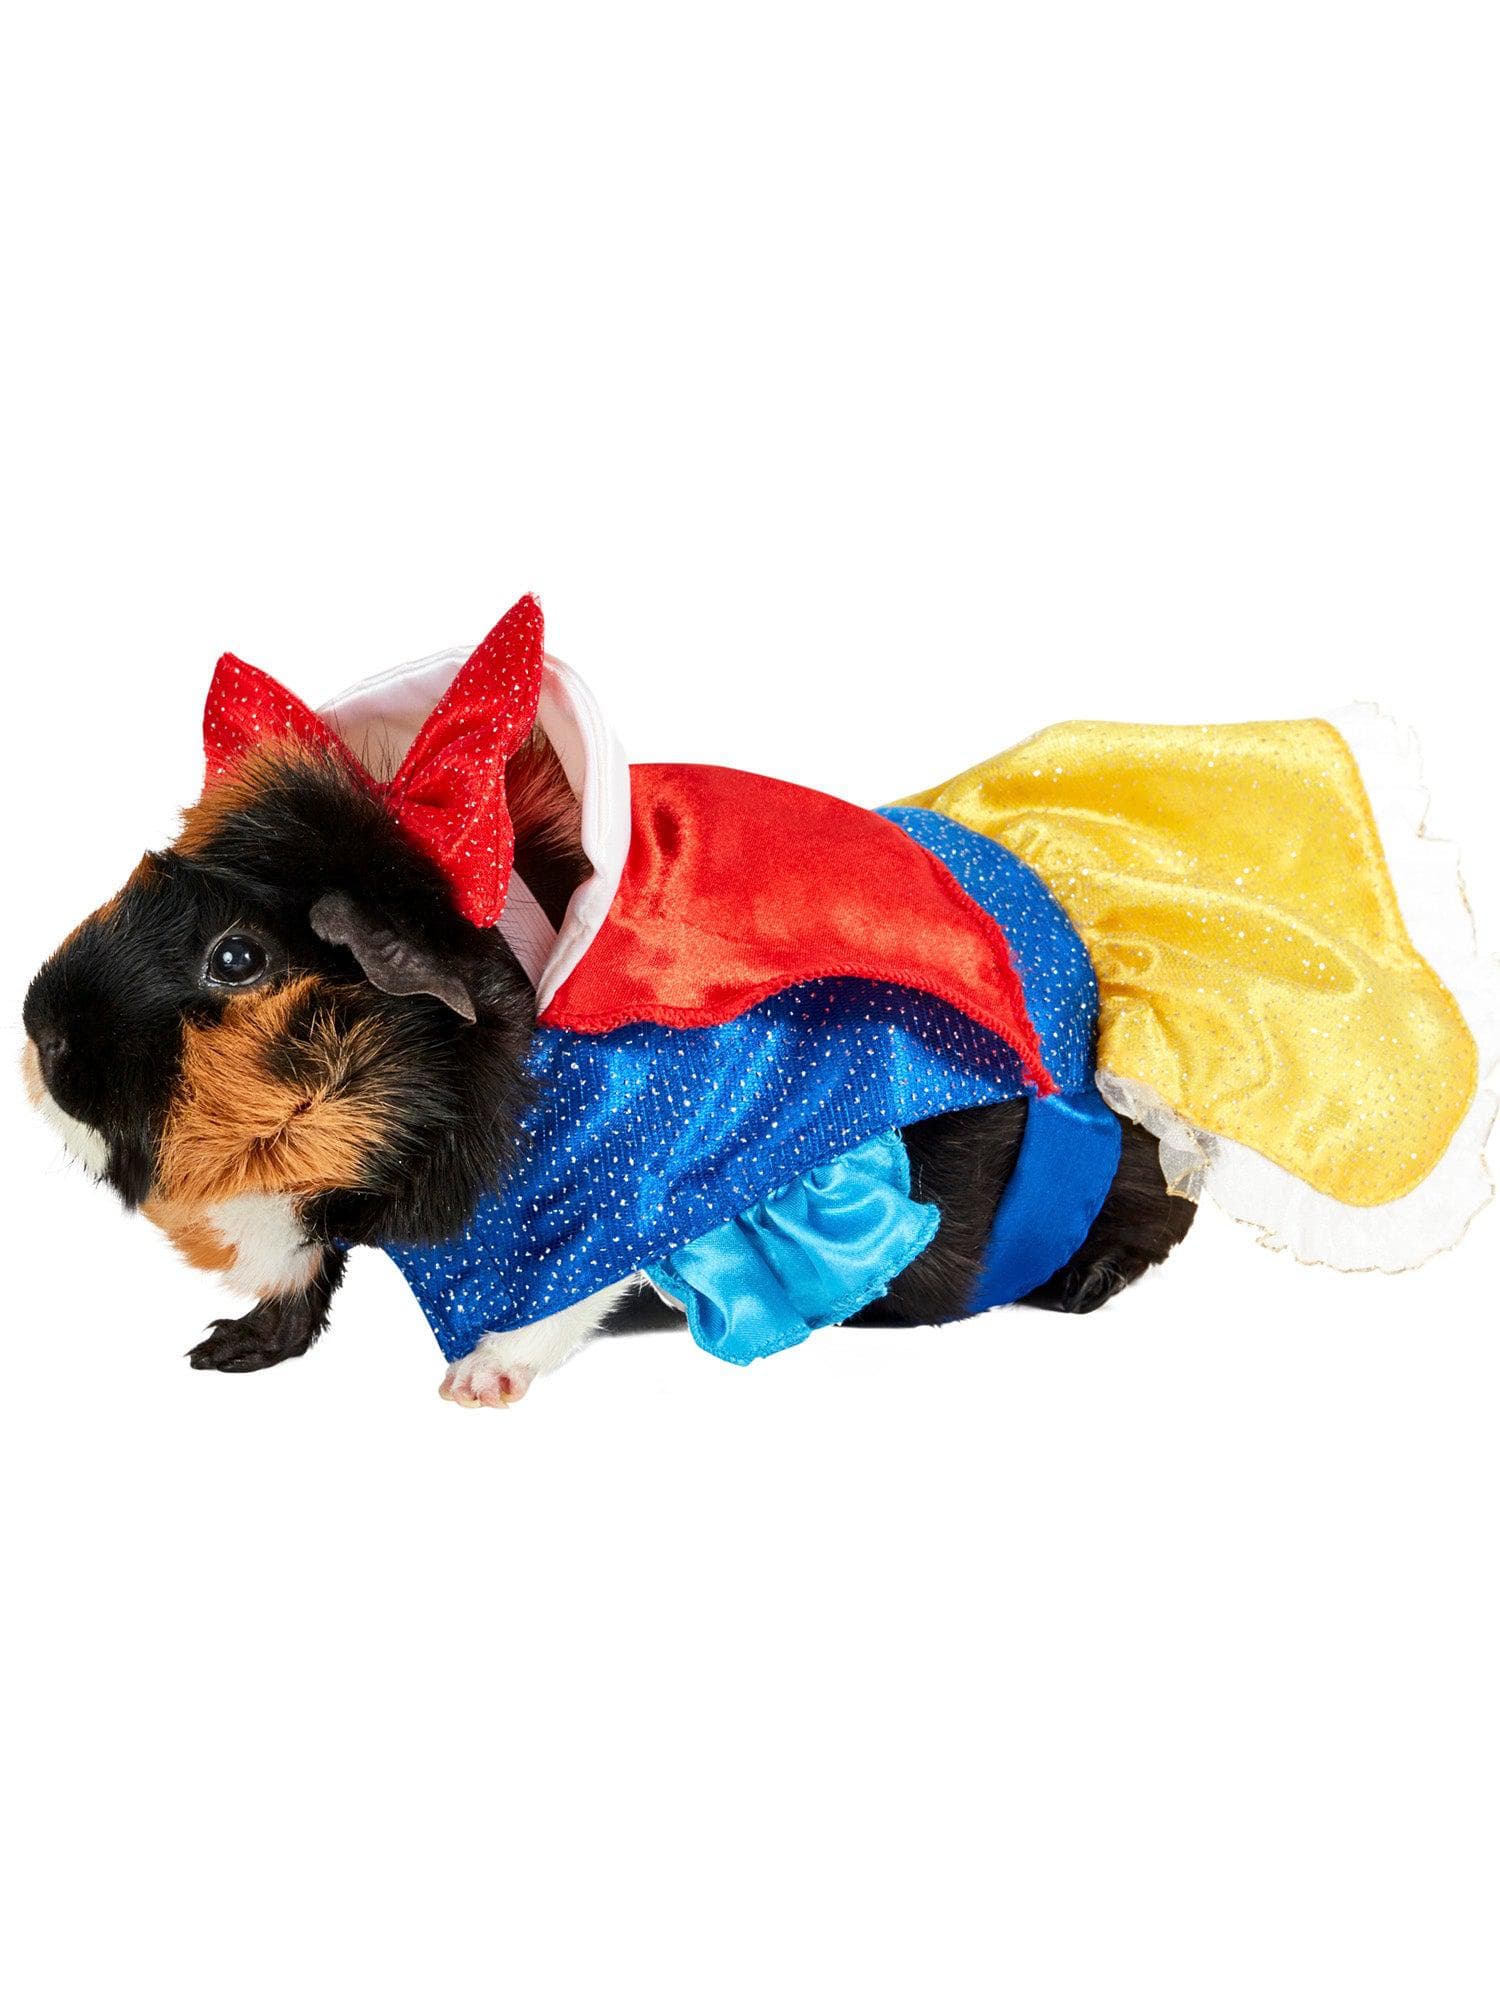 Snow White Small Pet Costume - costumes.com